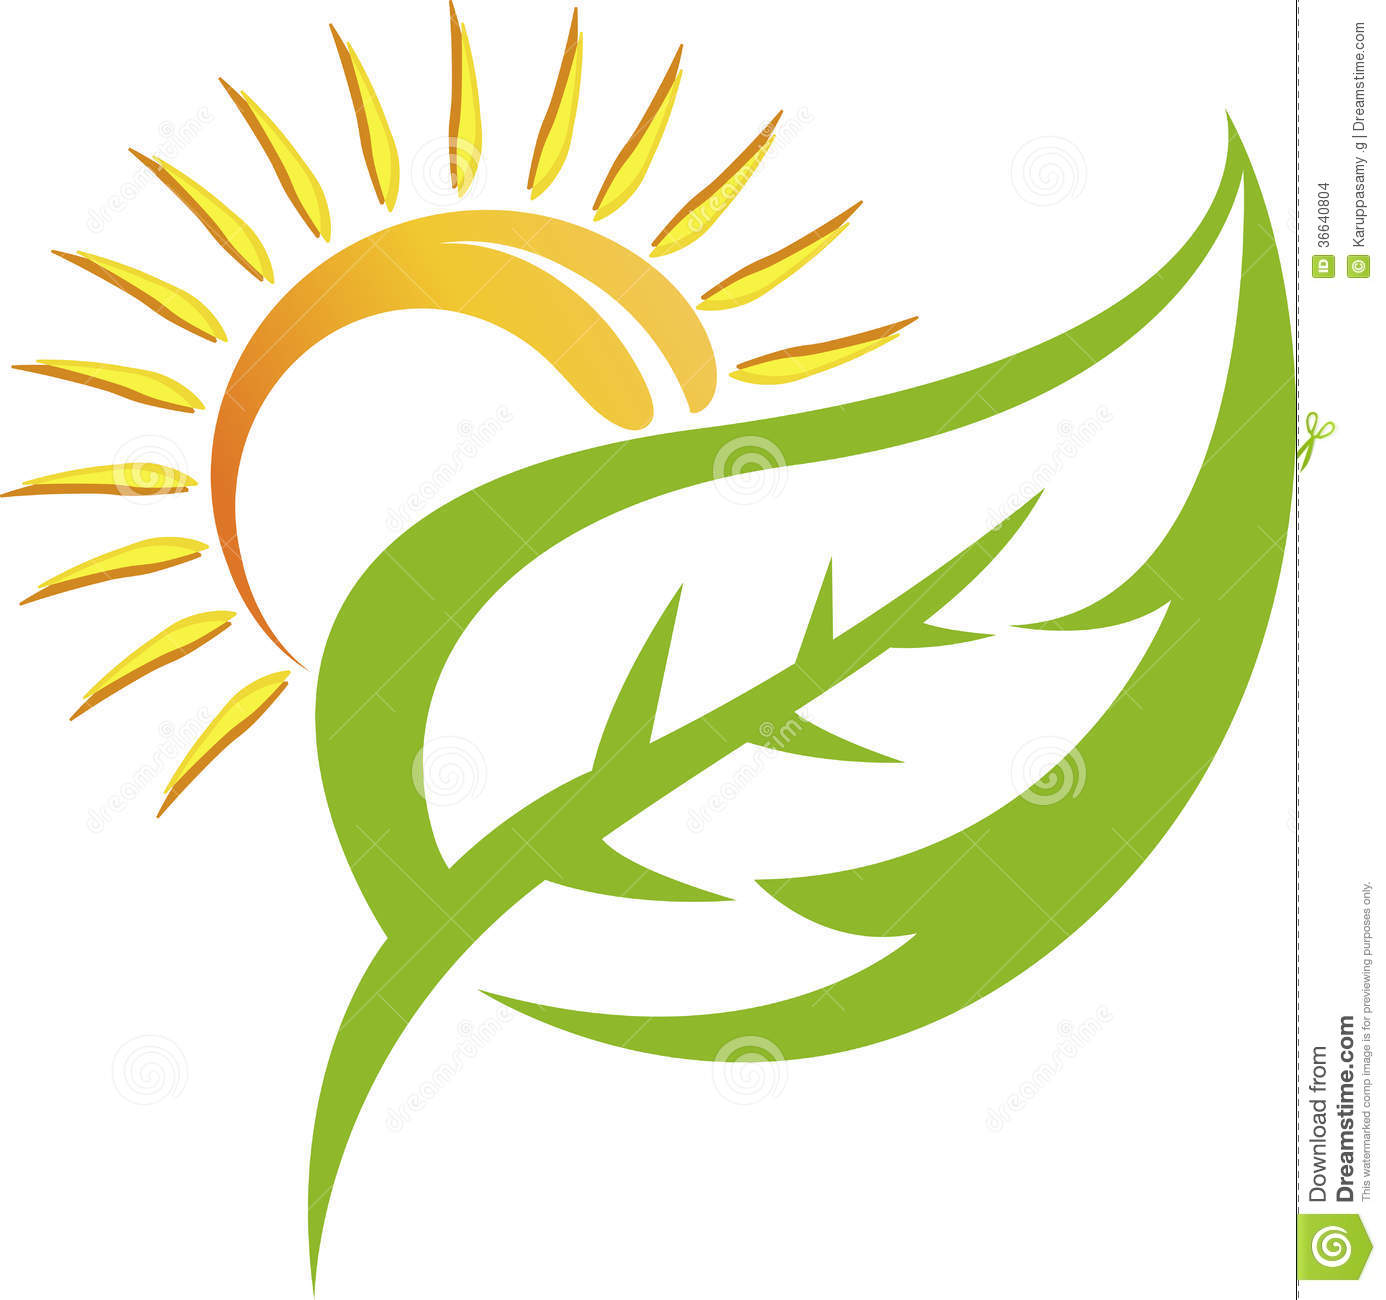 Company Logo with Leaf